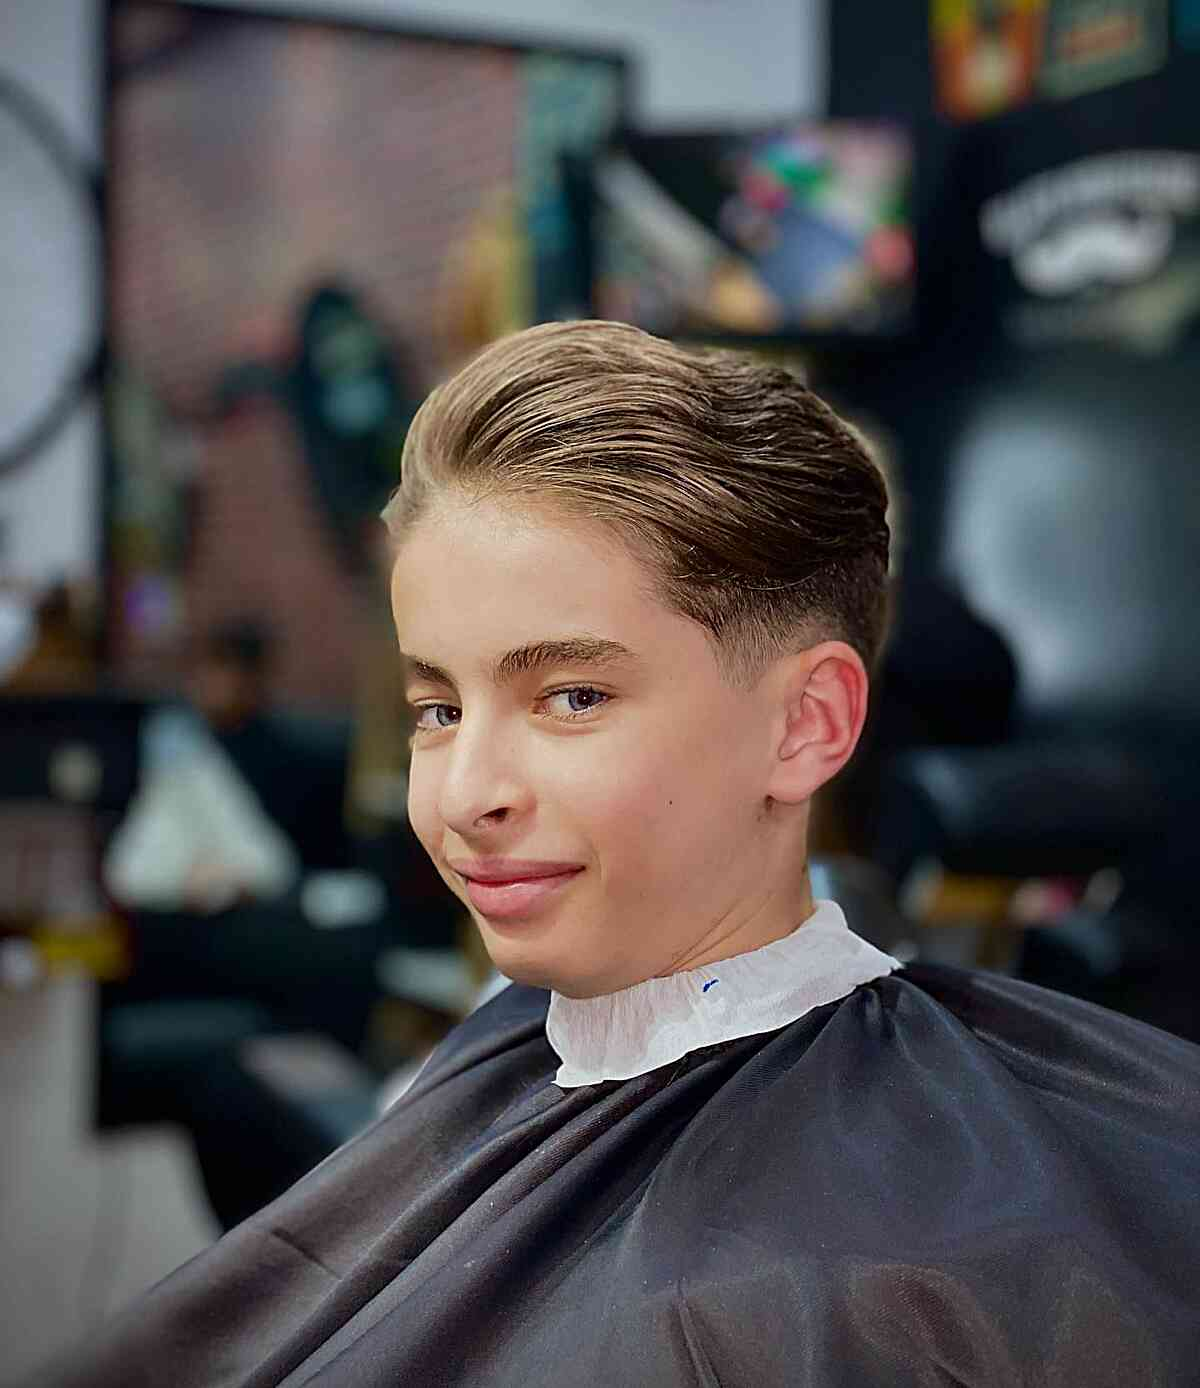 Boys haircut: Picture a little man getting a stylish haircut in a salon